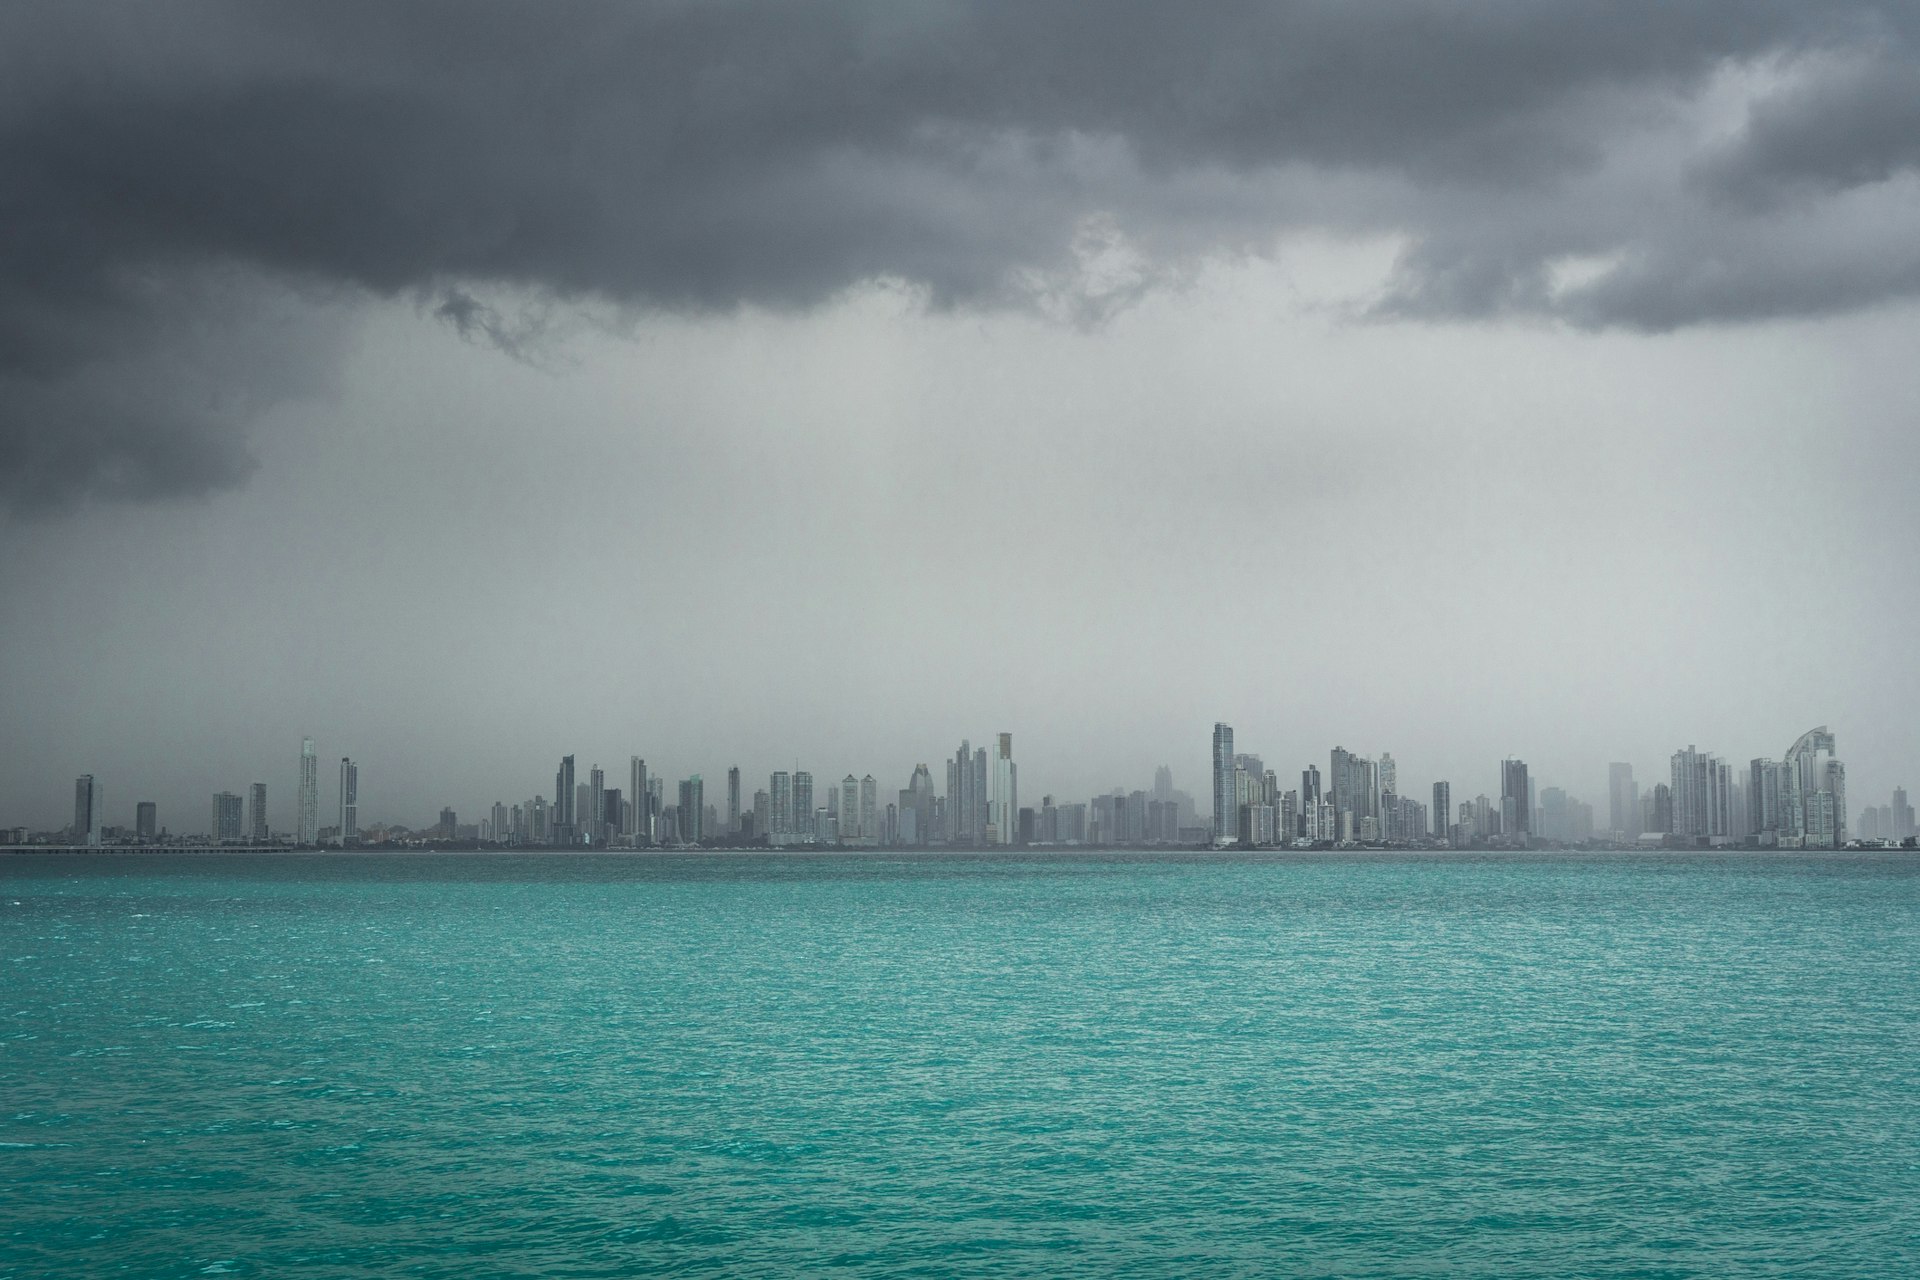 Rain over Panama City's skyline viewed from the water